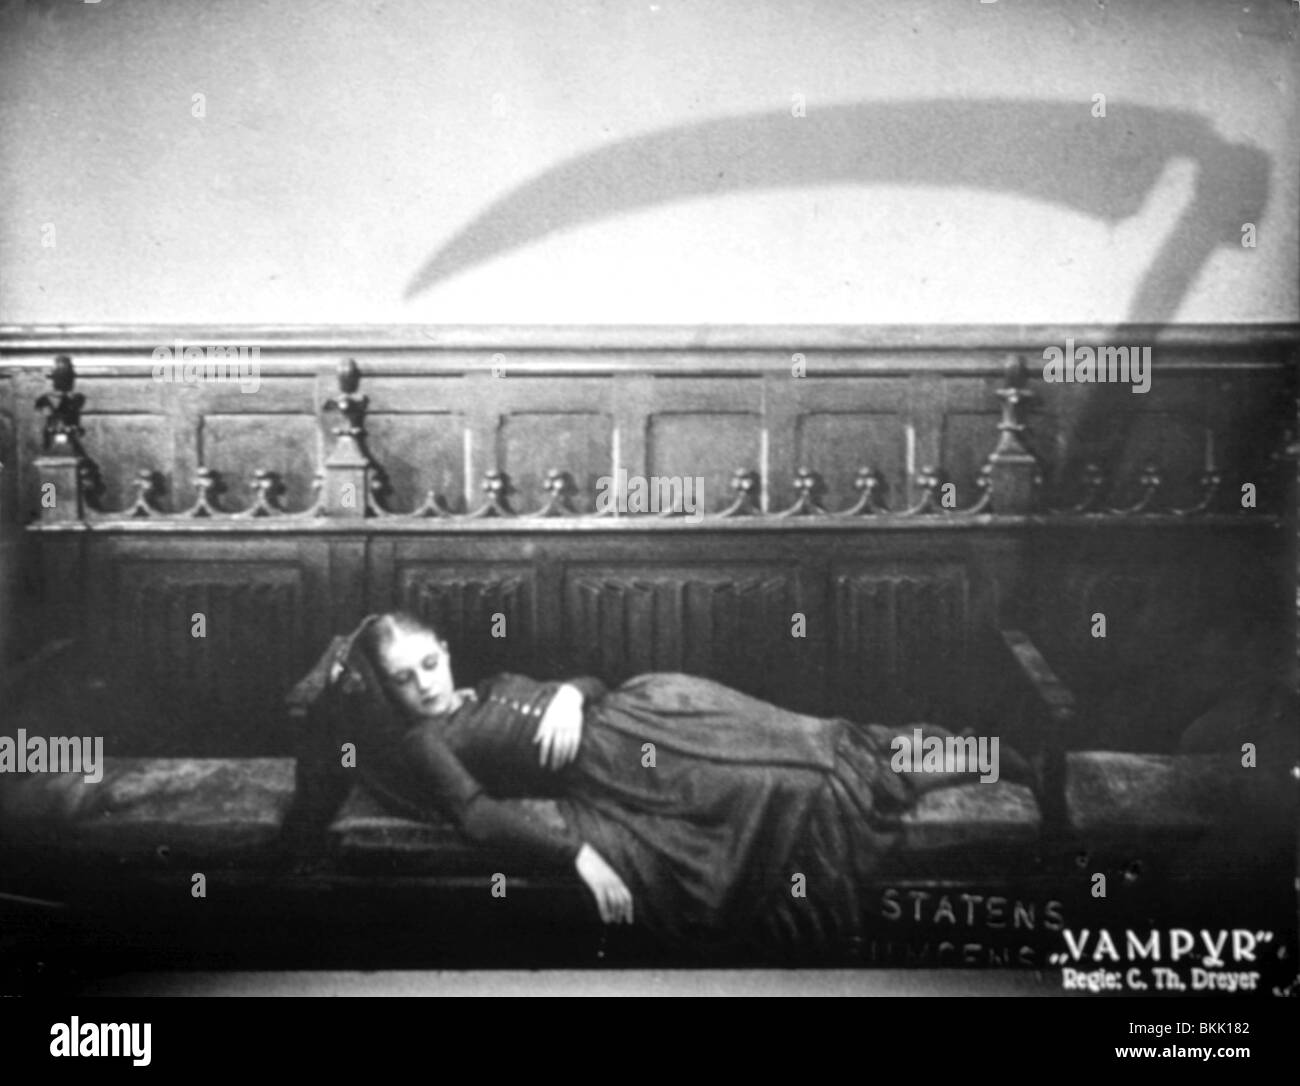 VAMPYR (1932) CARL THEODOR DREYER (DIR) VPYR 002 Stock Photo